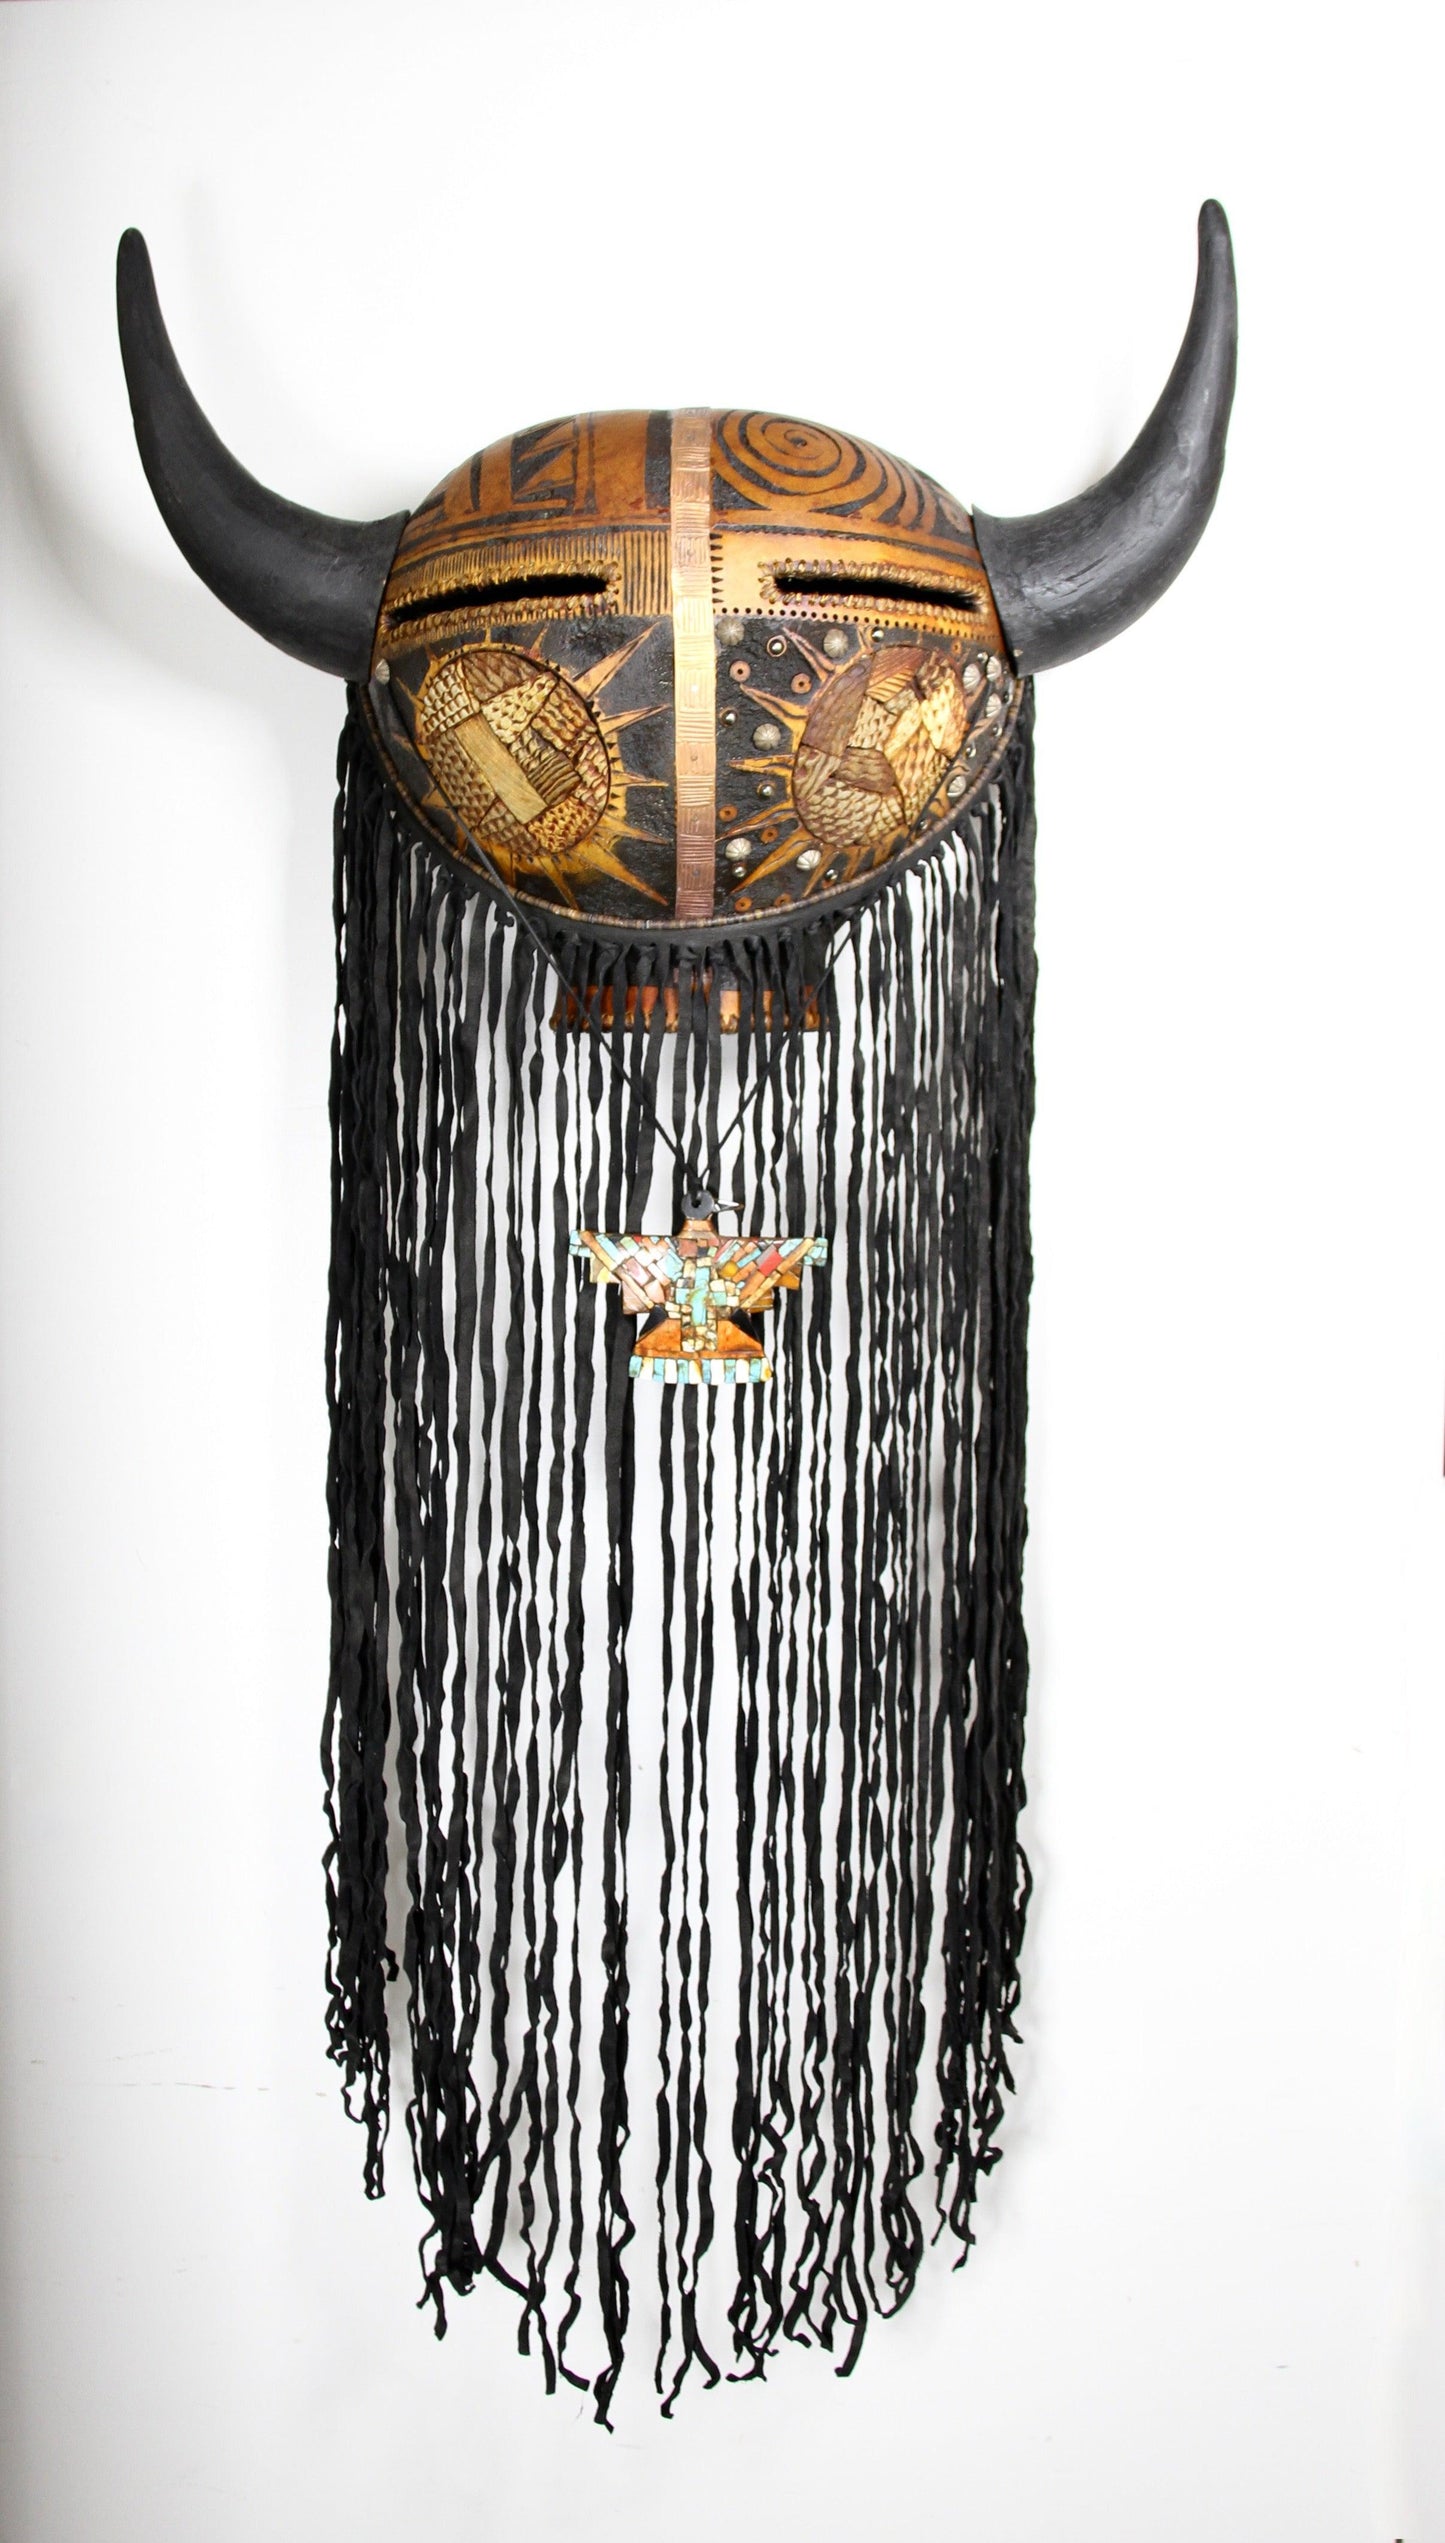 Sandblasted Buffalo Mask-Sculpture-Robert Rivera-Sorrel Sky Gallery